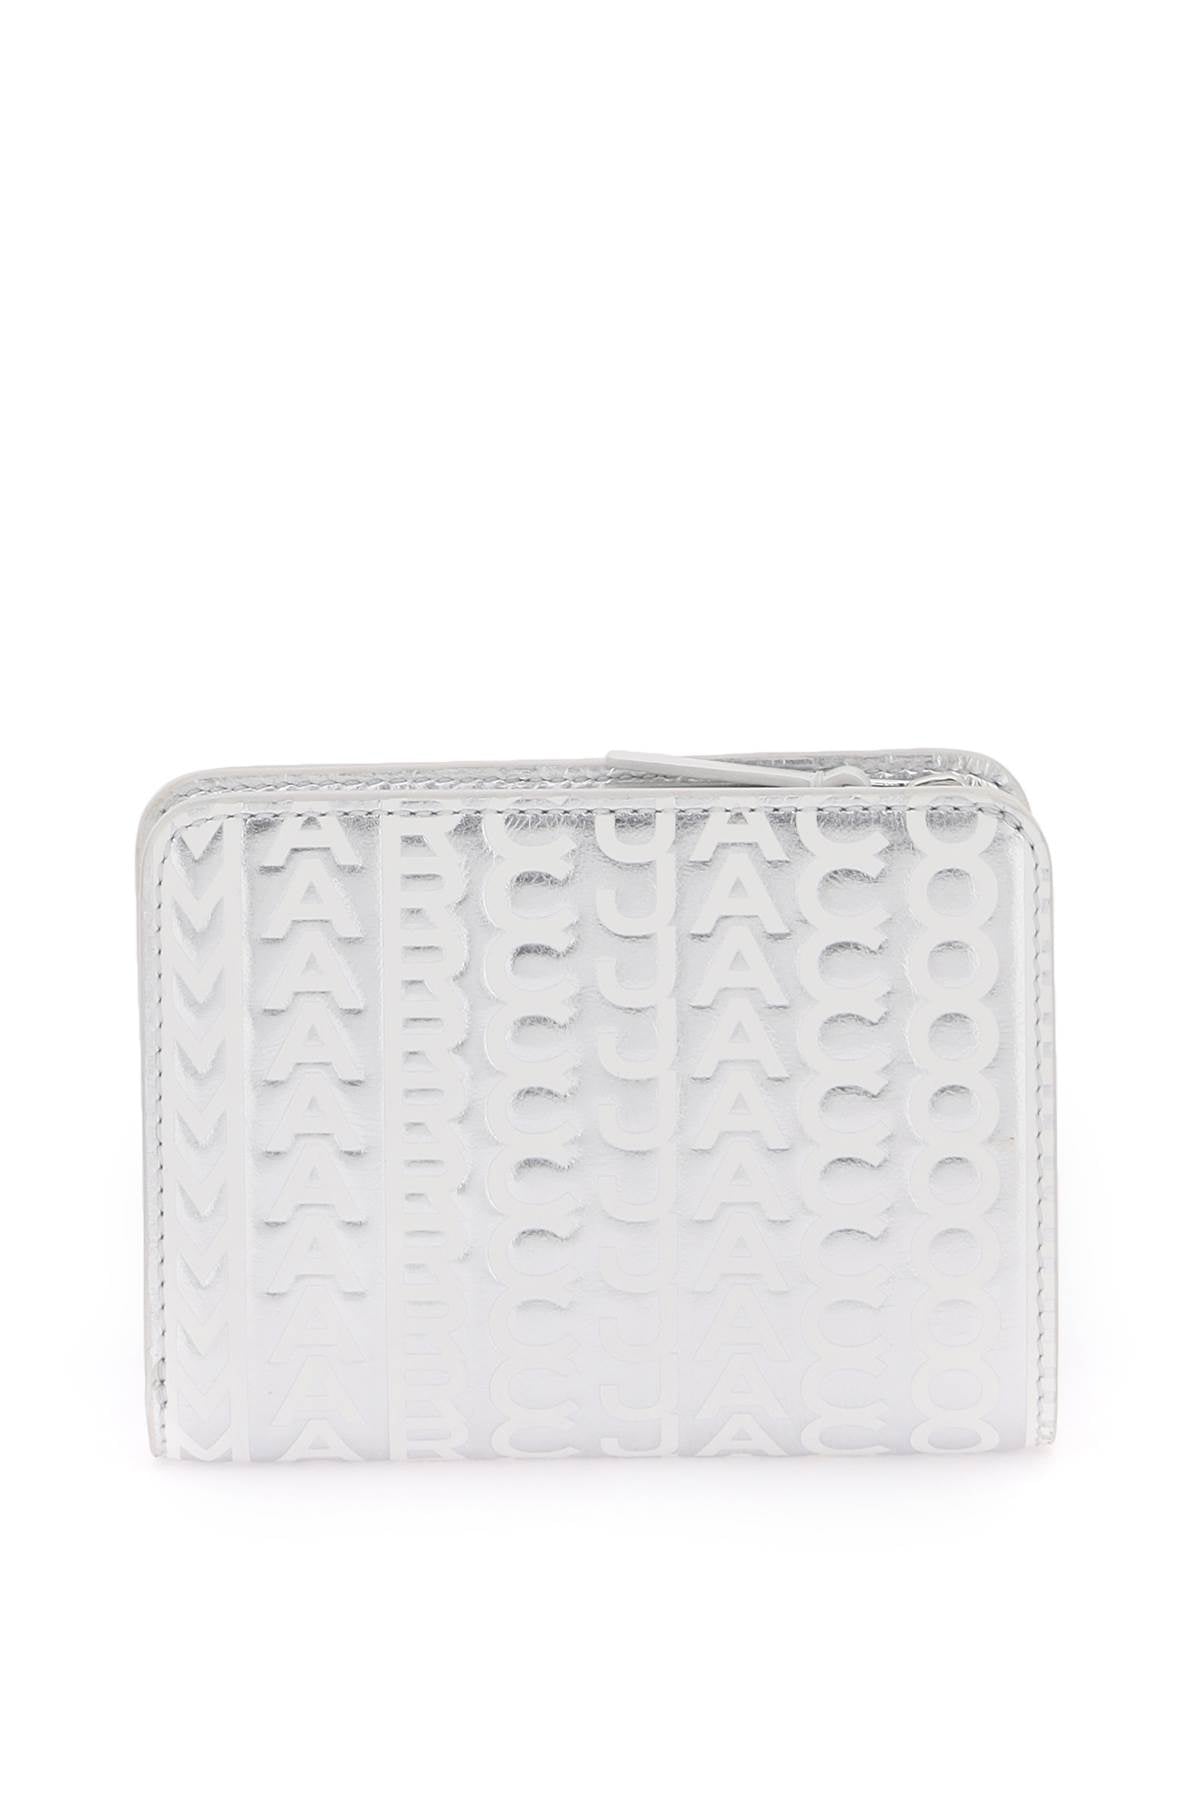 Marc Jacobs The Monogram Metallic Mini Compact Wallet   Argento